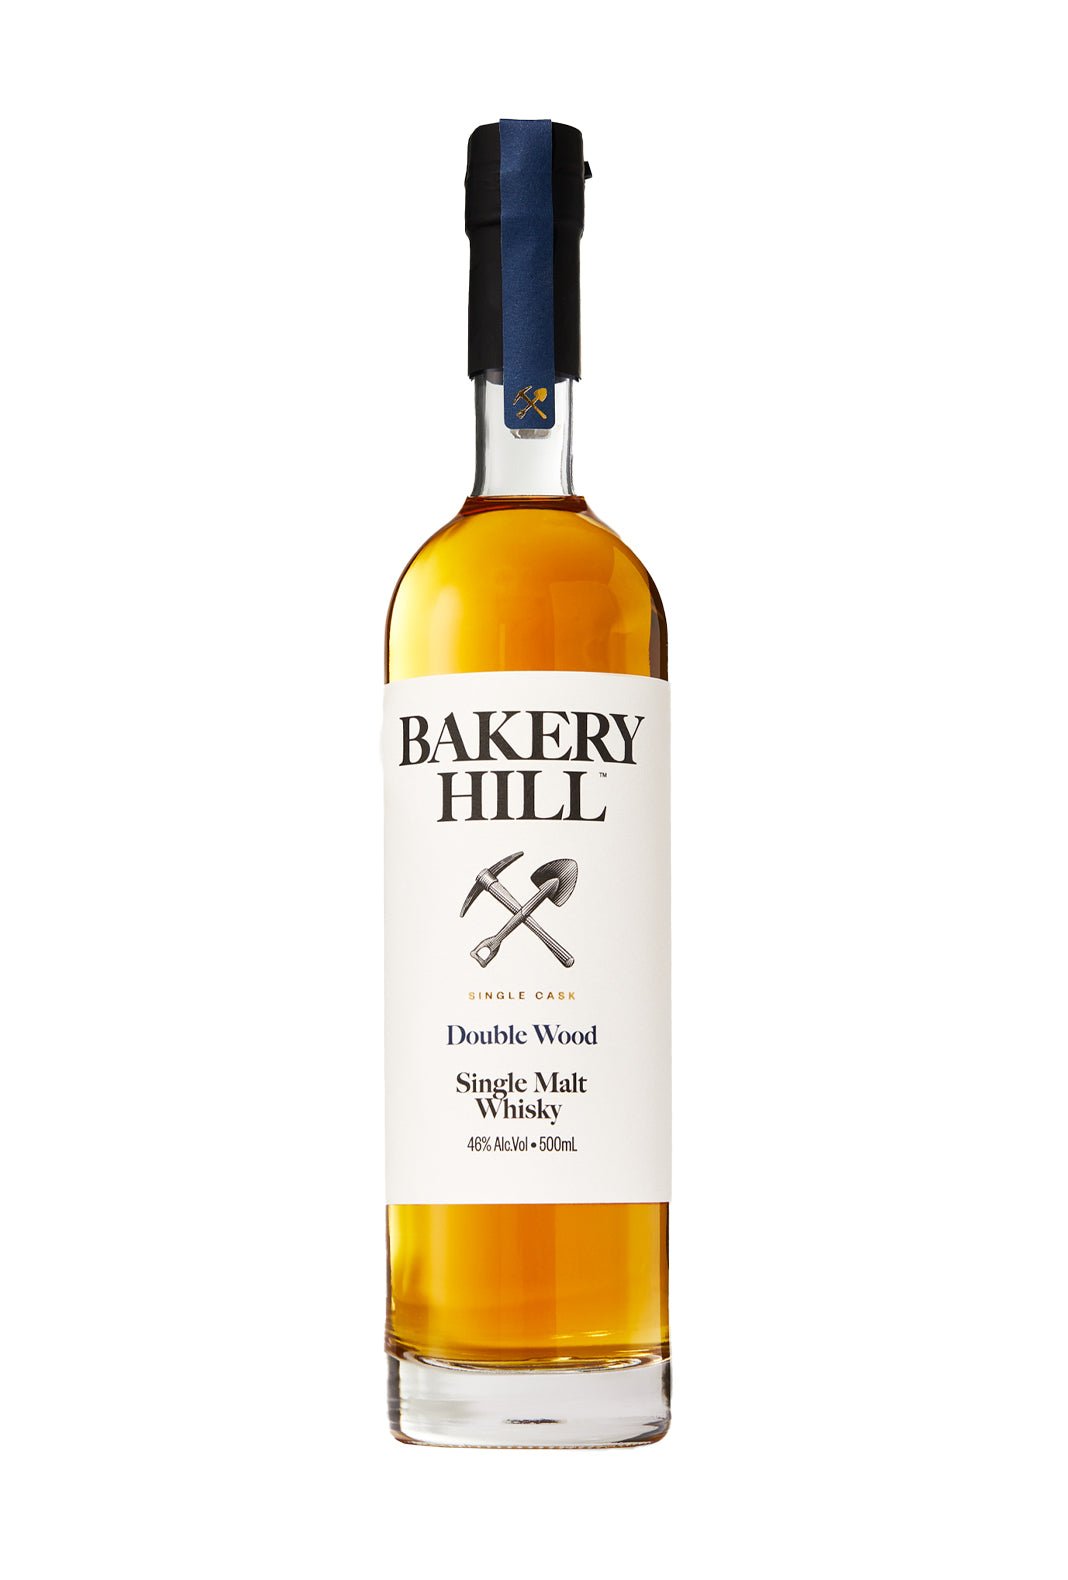 Bakery Hill Double Wood Single Malt Whisky 46% 500ml | Whisky | Shop online at Spirits of France